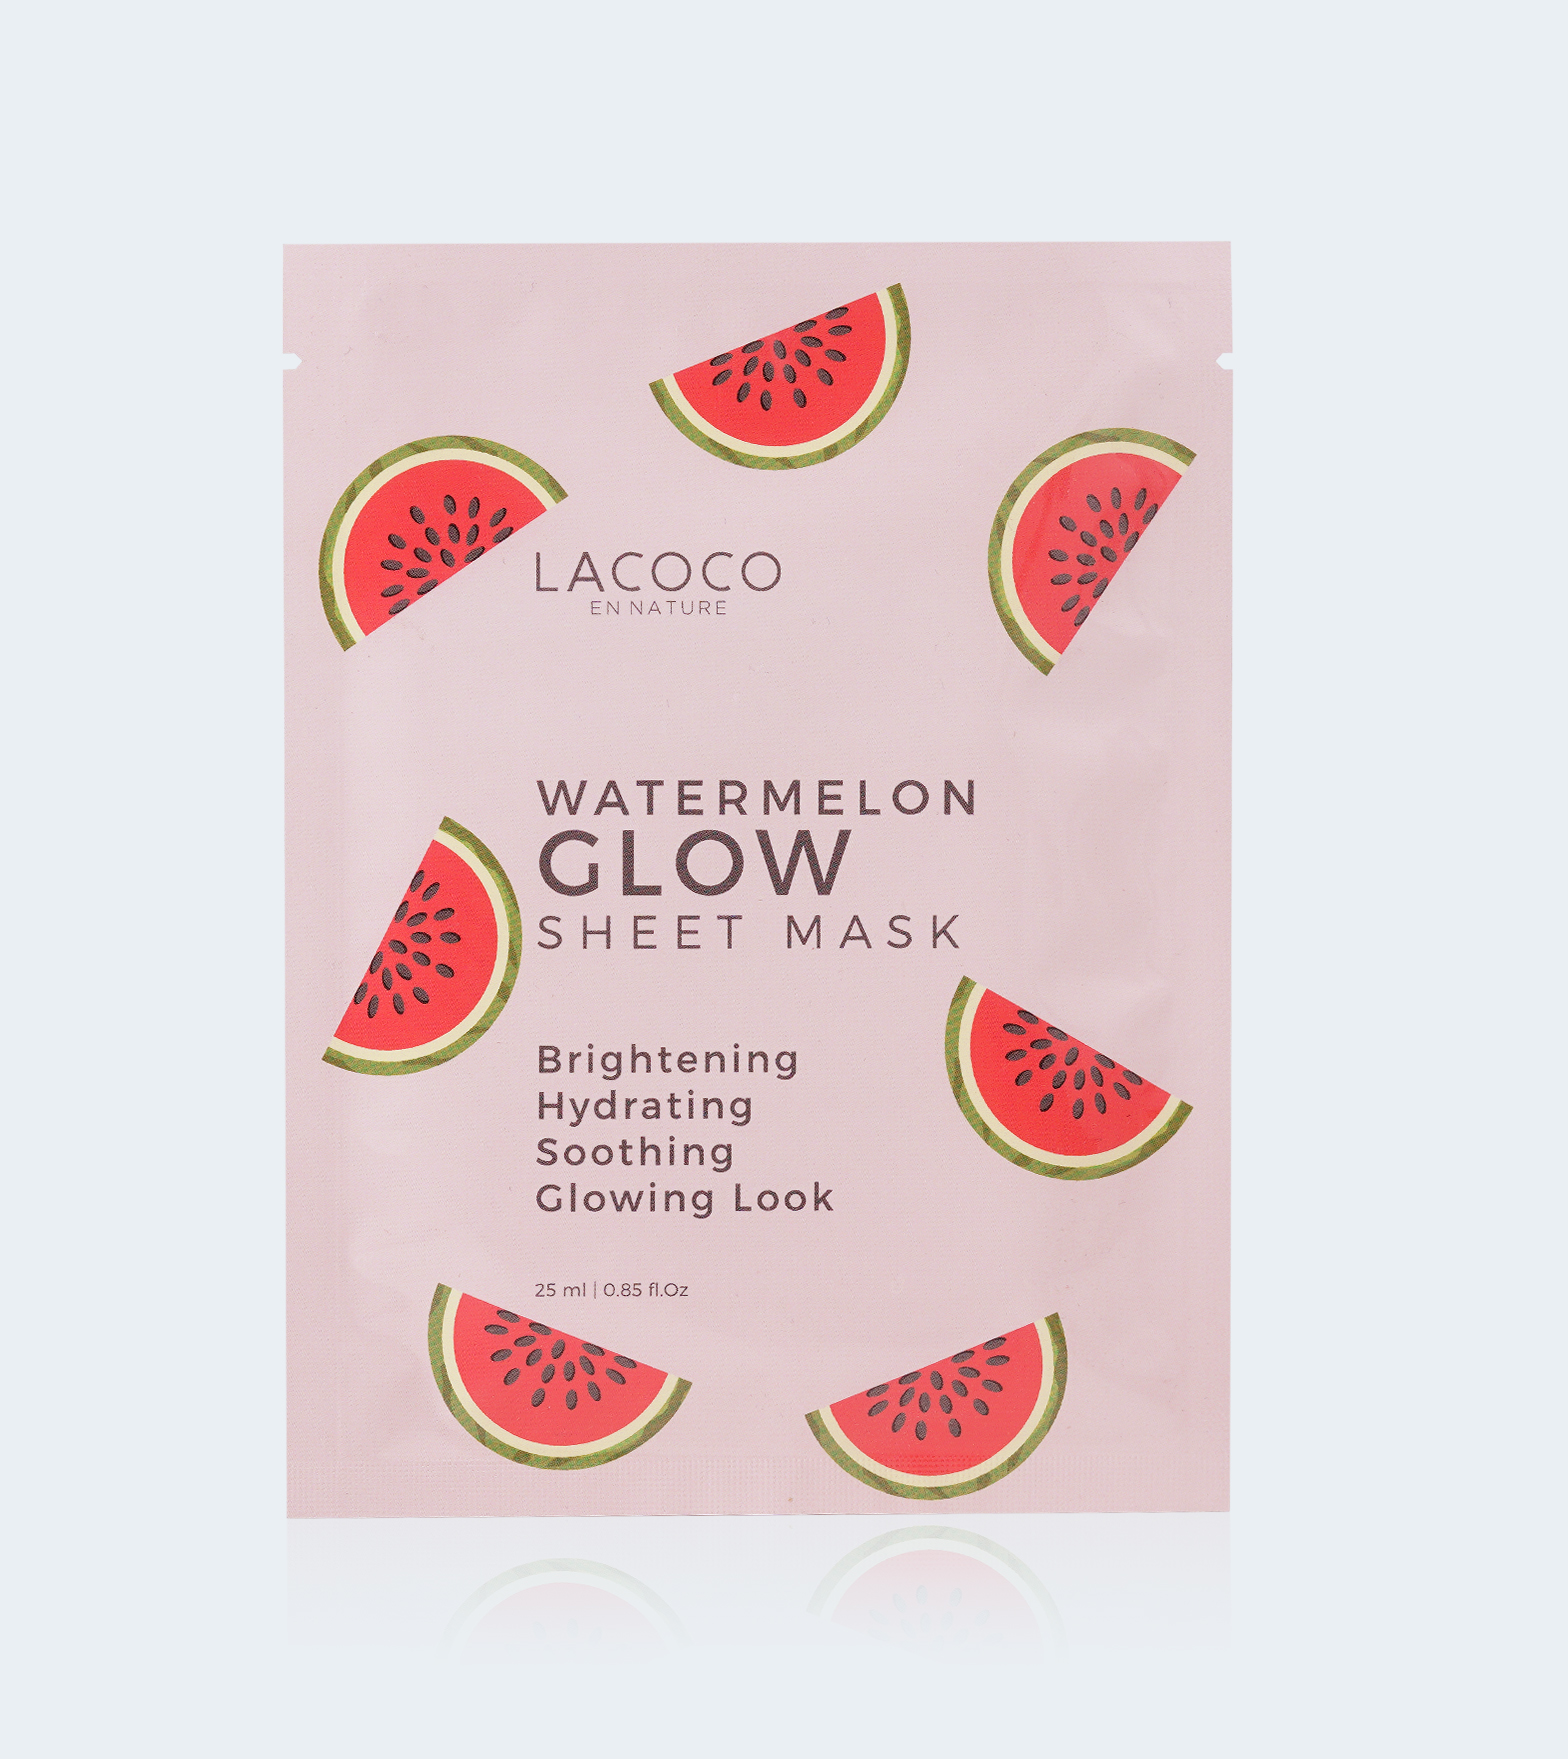 Watermelon Glow Sheet Mask